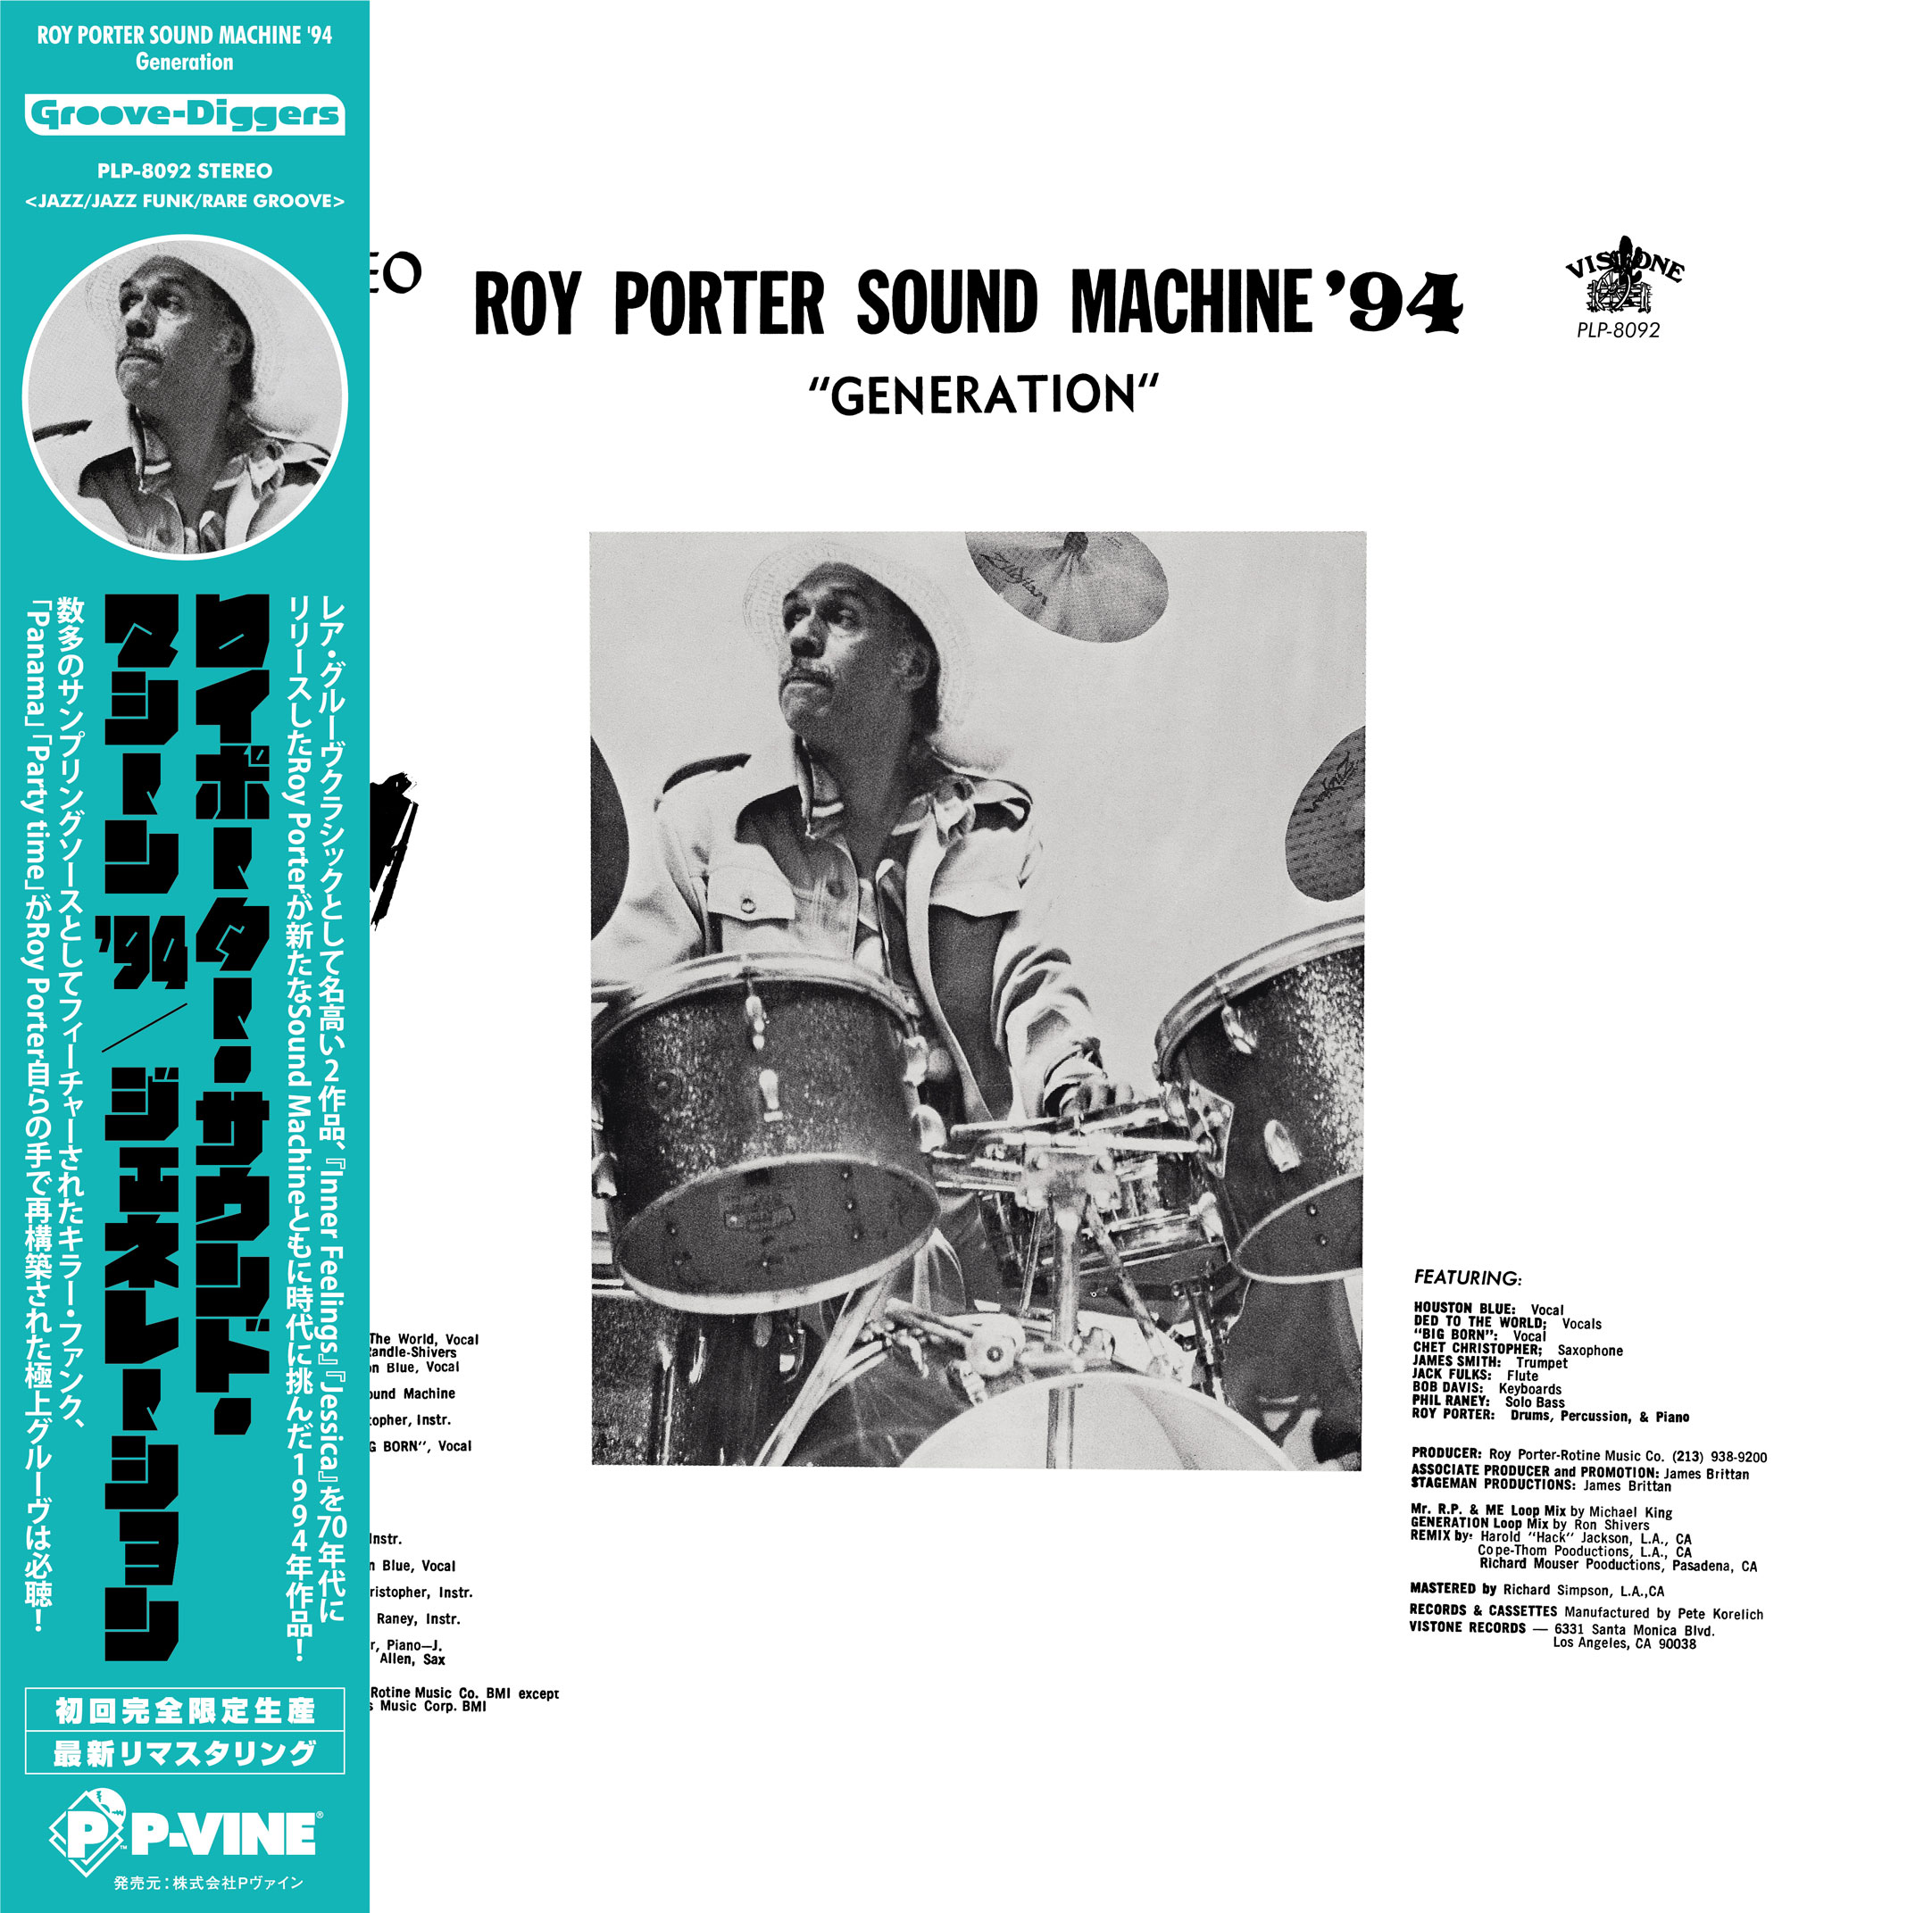 ROY PORTER SOUND MACHINE - アーティスト情報 - P-VINE, Inc.